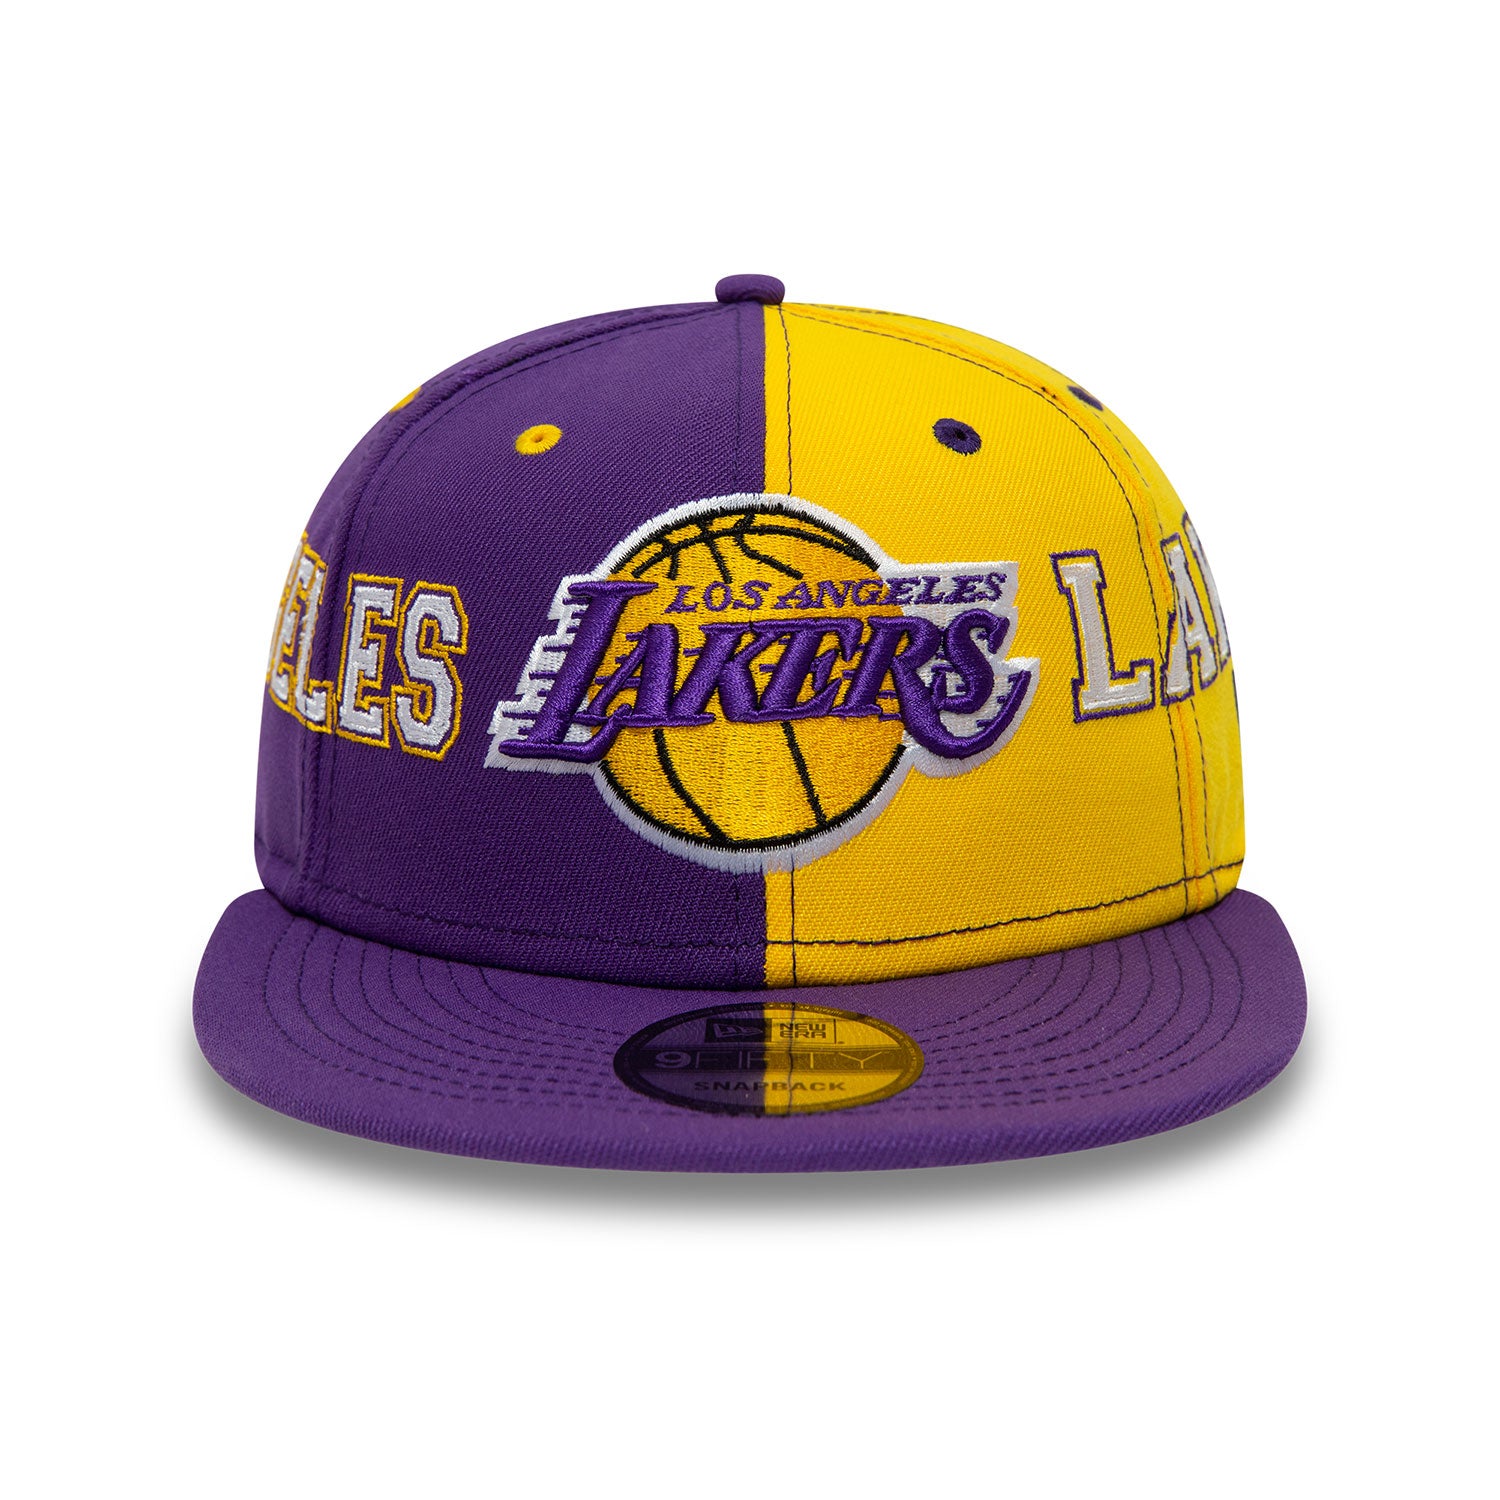 New Era -  LA Lakers Teamsplit Purple 9FIFTY Snapback Cap